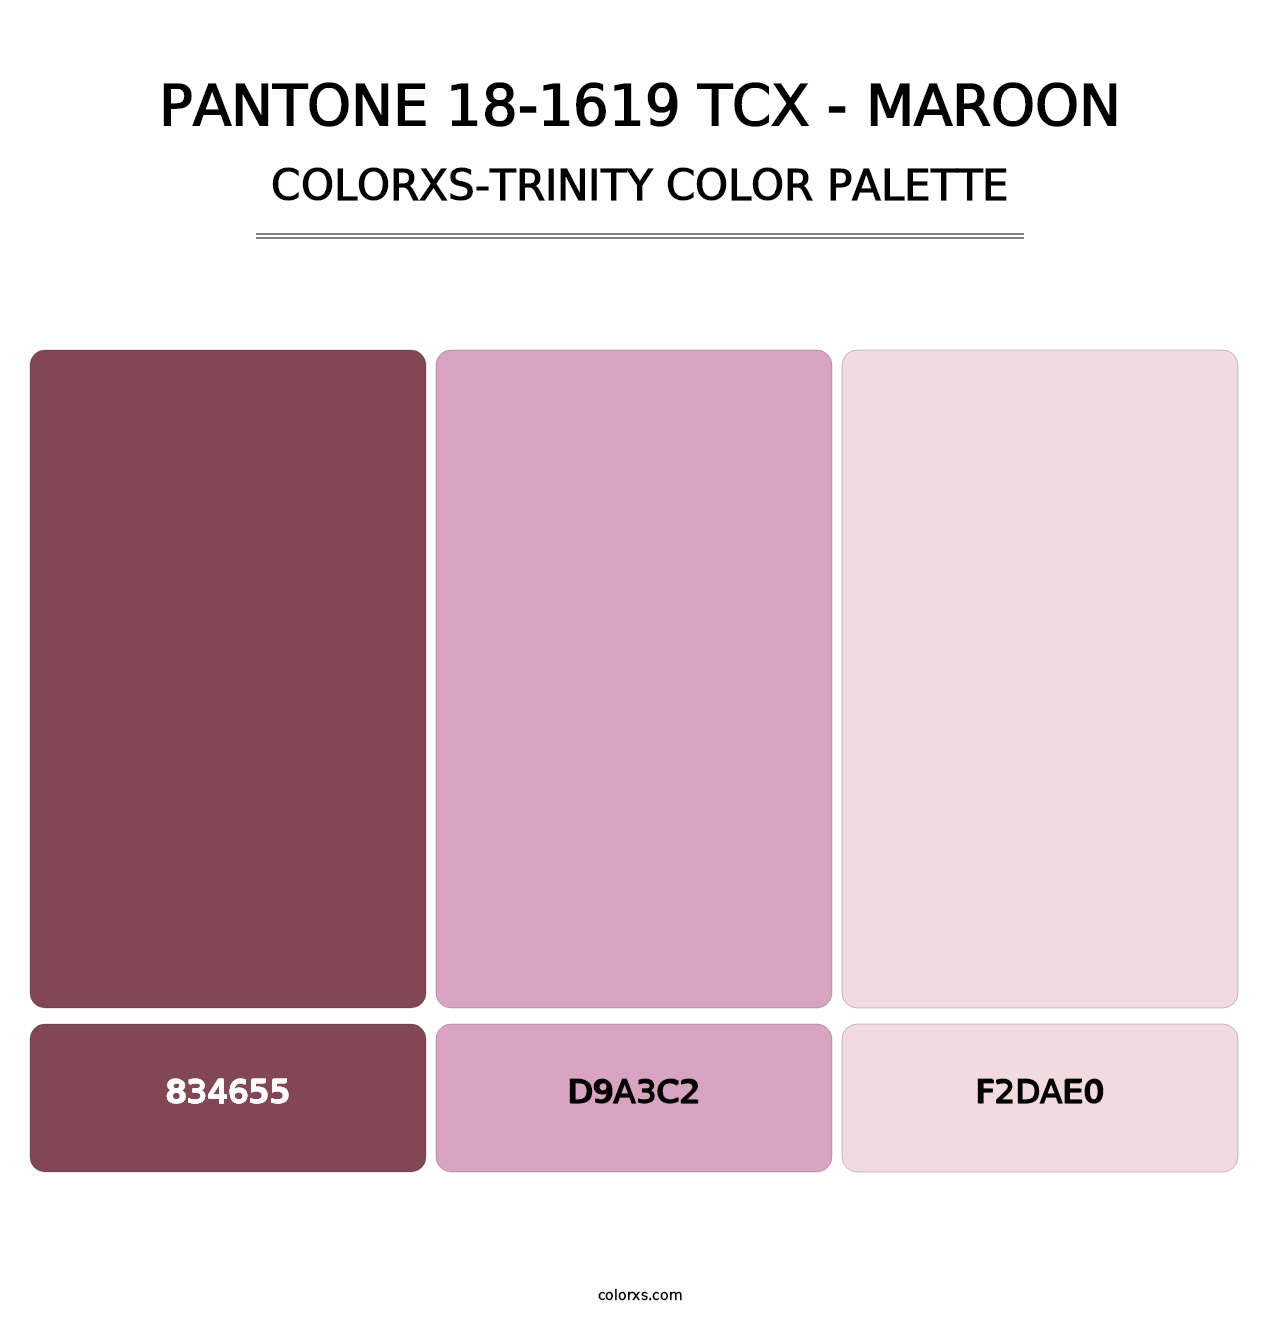 PANTONE 18-1619 TCX - Maroon - Colorxs Trinity Palette